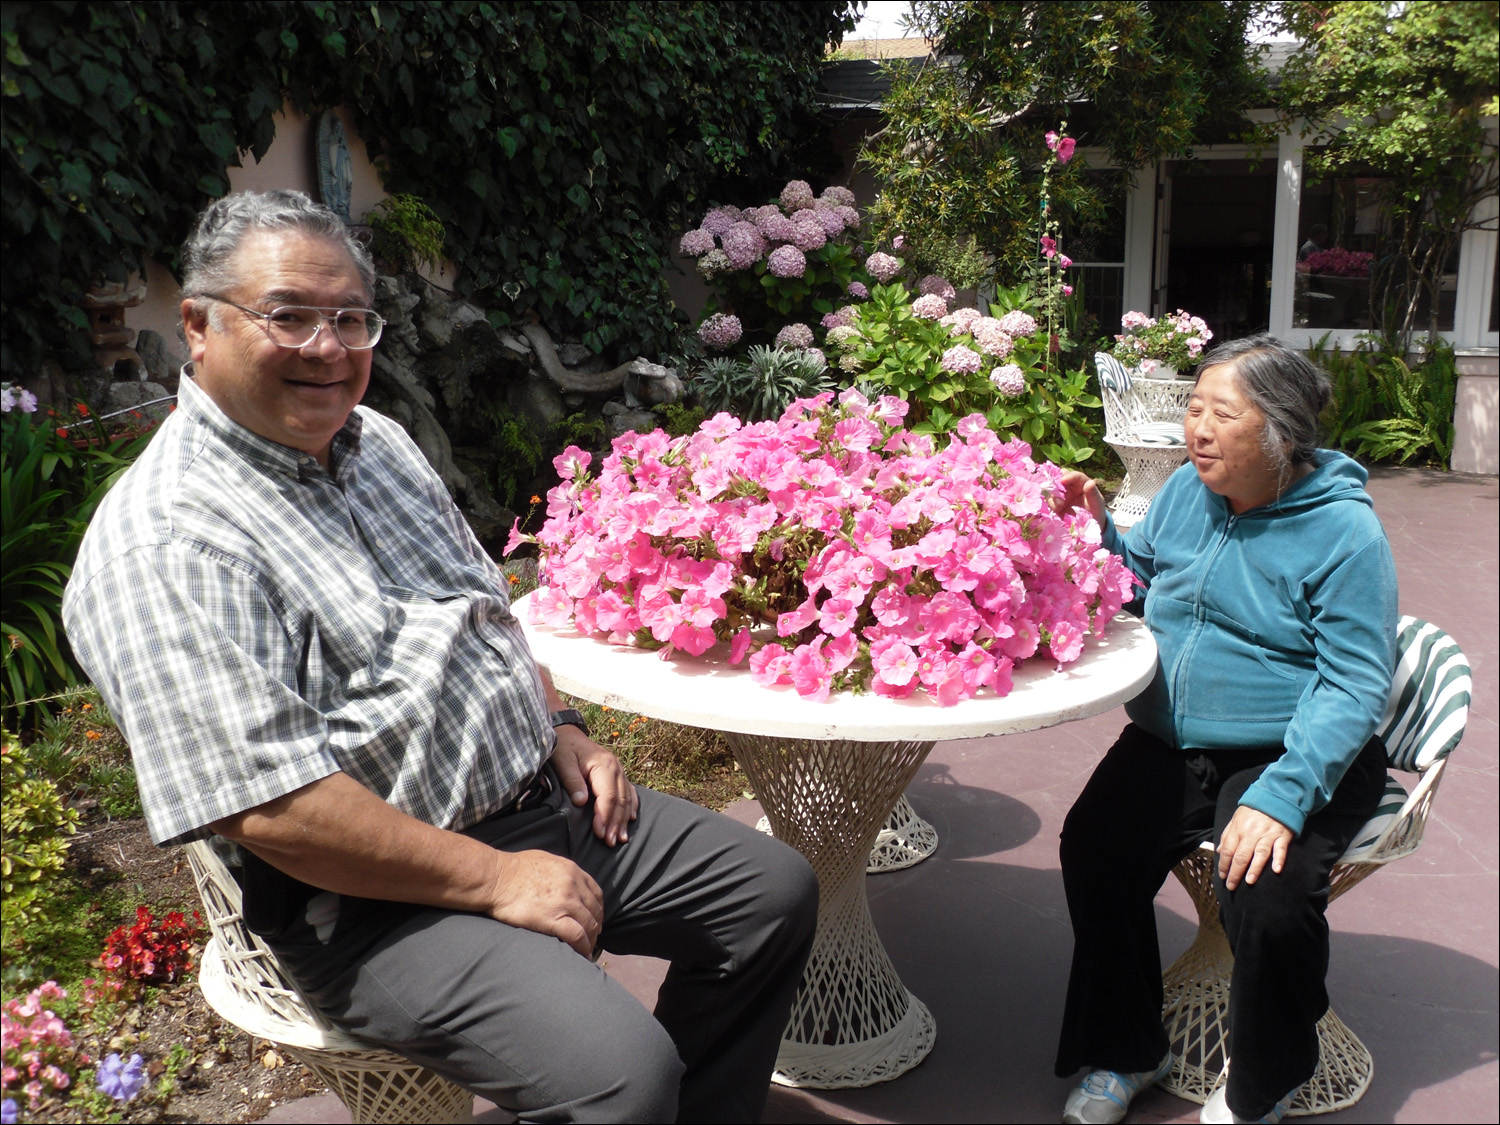 Ron & Lorene in Martine Inn garden patio